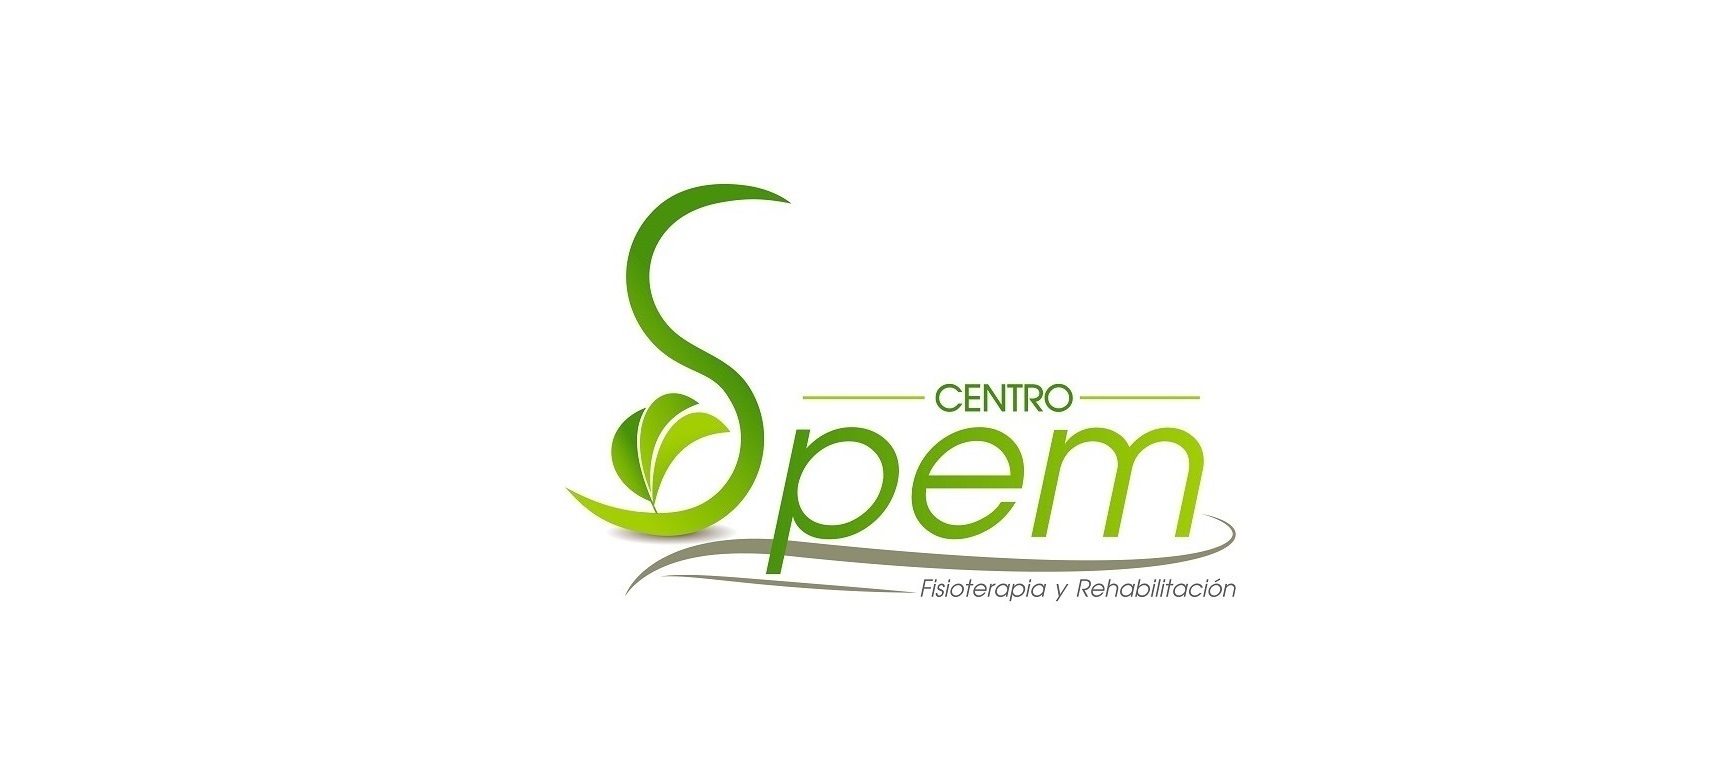 Centro SPEM de Rehabilitación Accidentes de Tráfico en Tenerife - Inicio